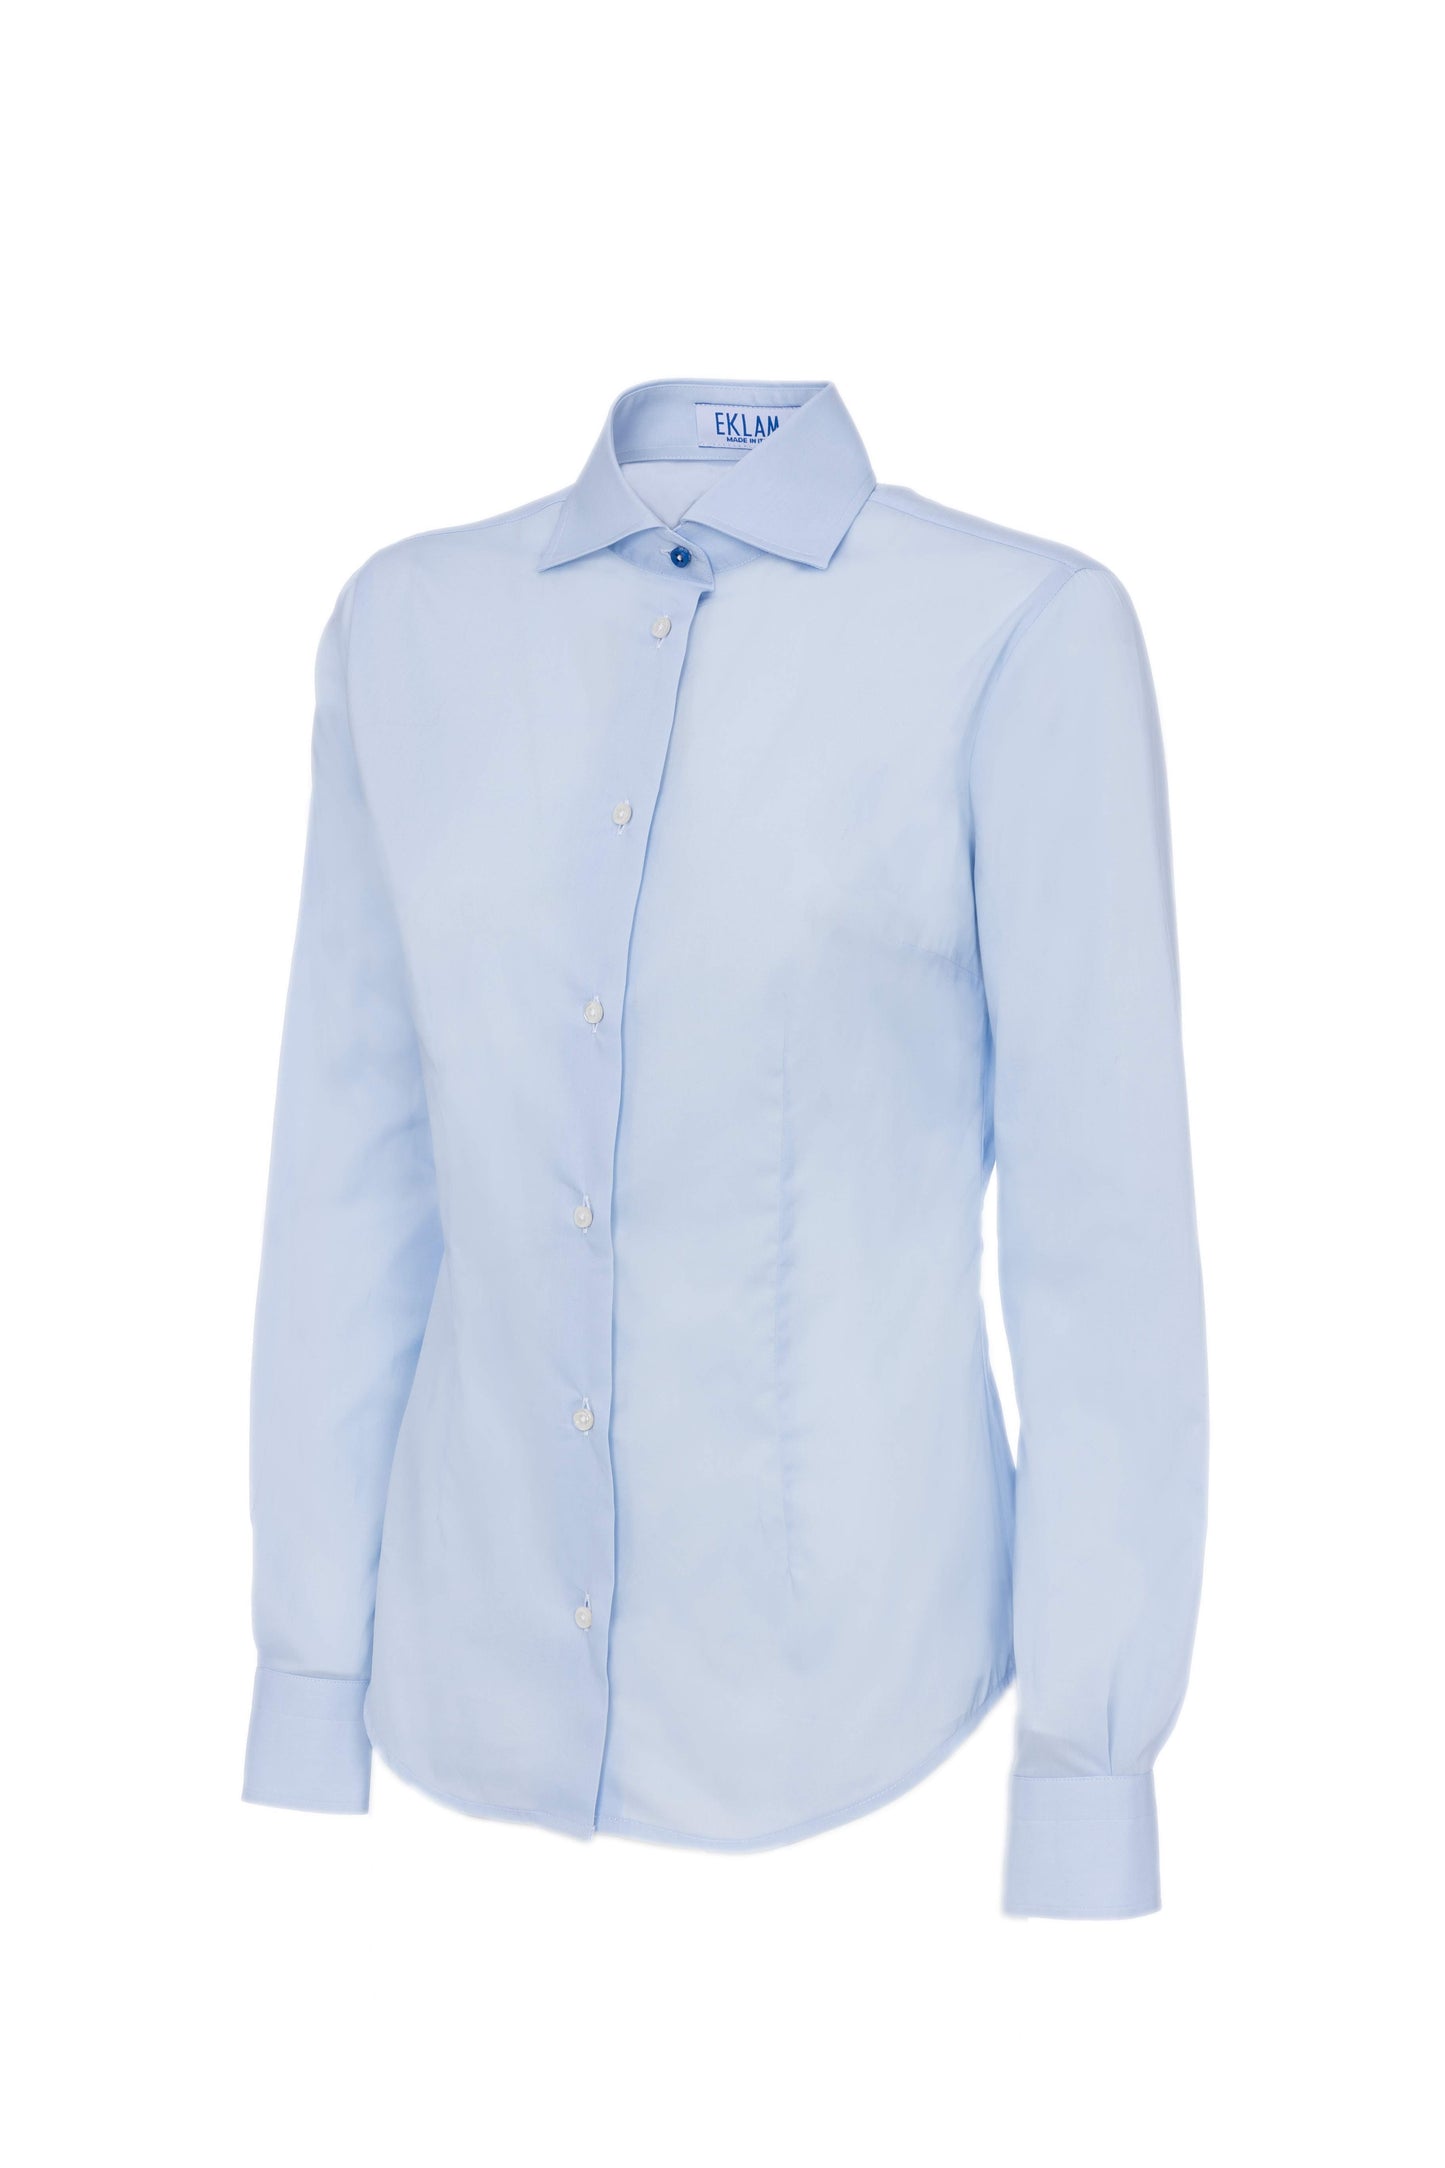 Women's sleeve blouse light blue